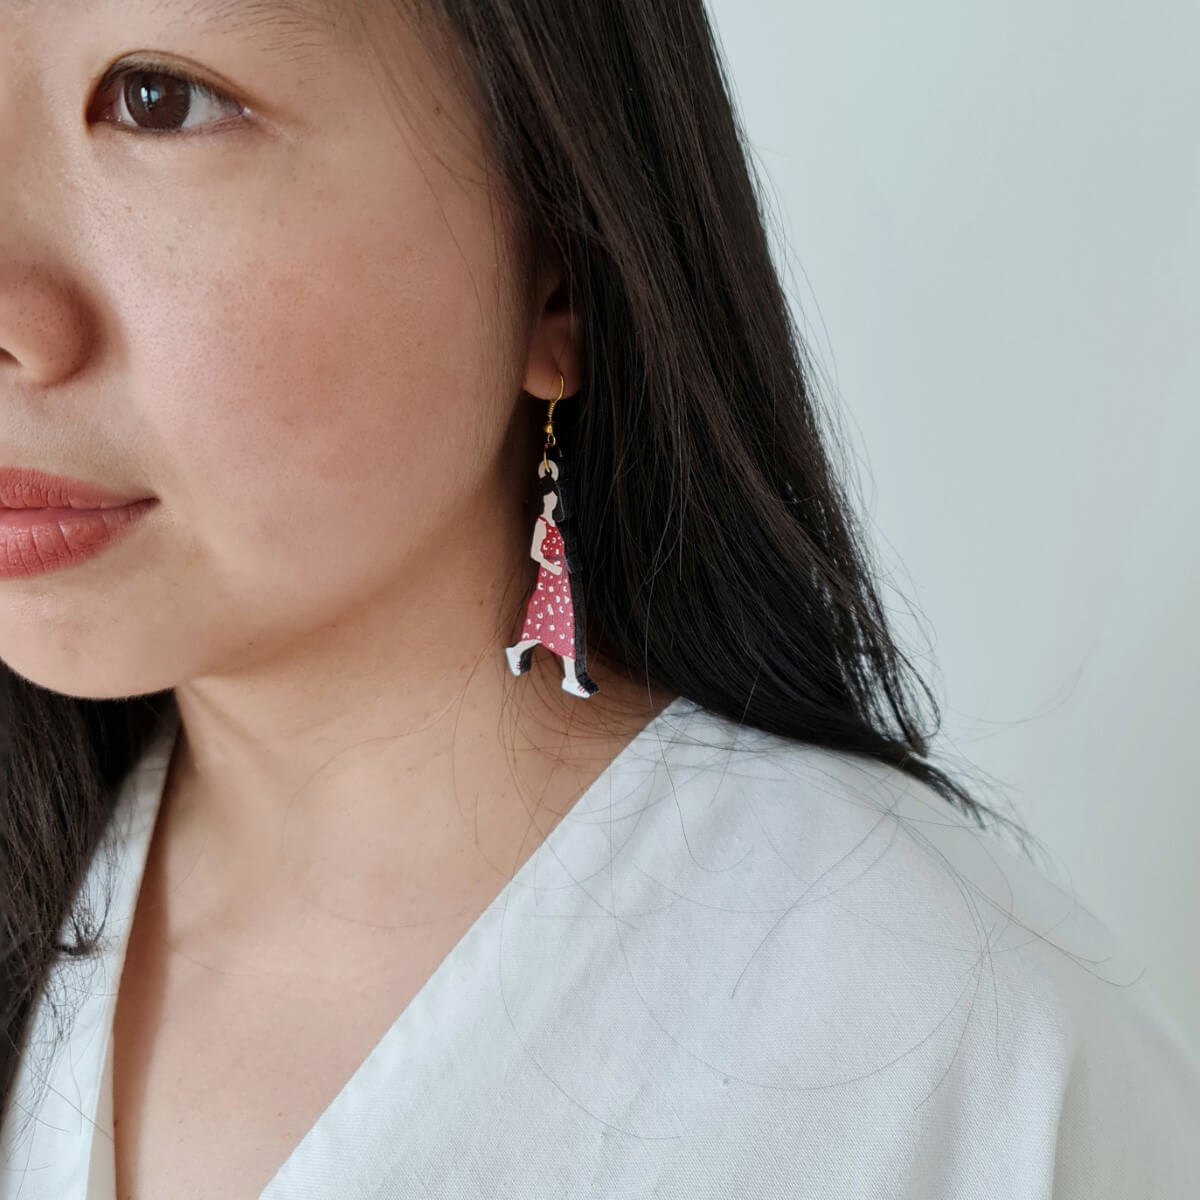 The Everyday Woman Custom Earrings